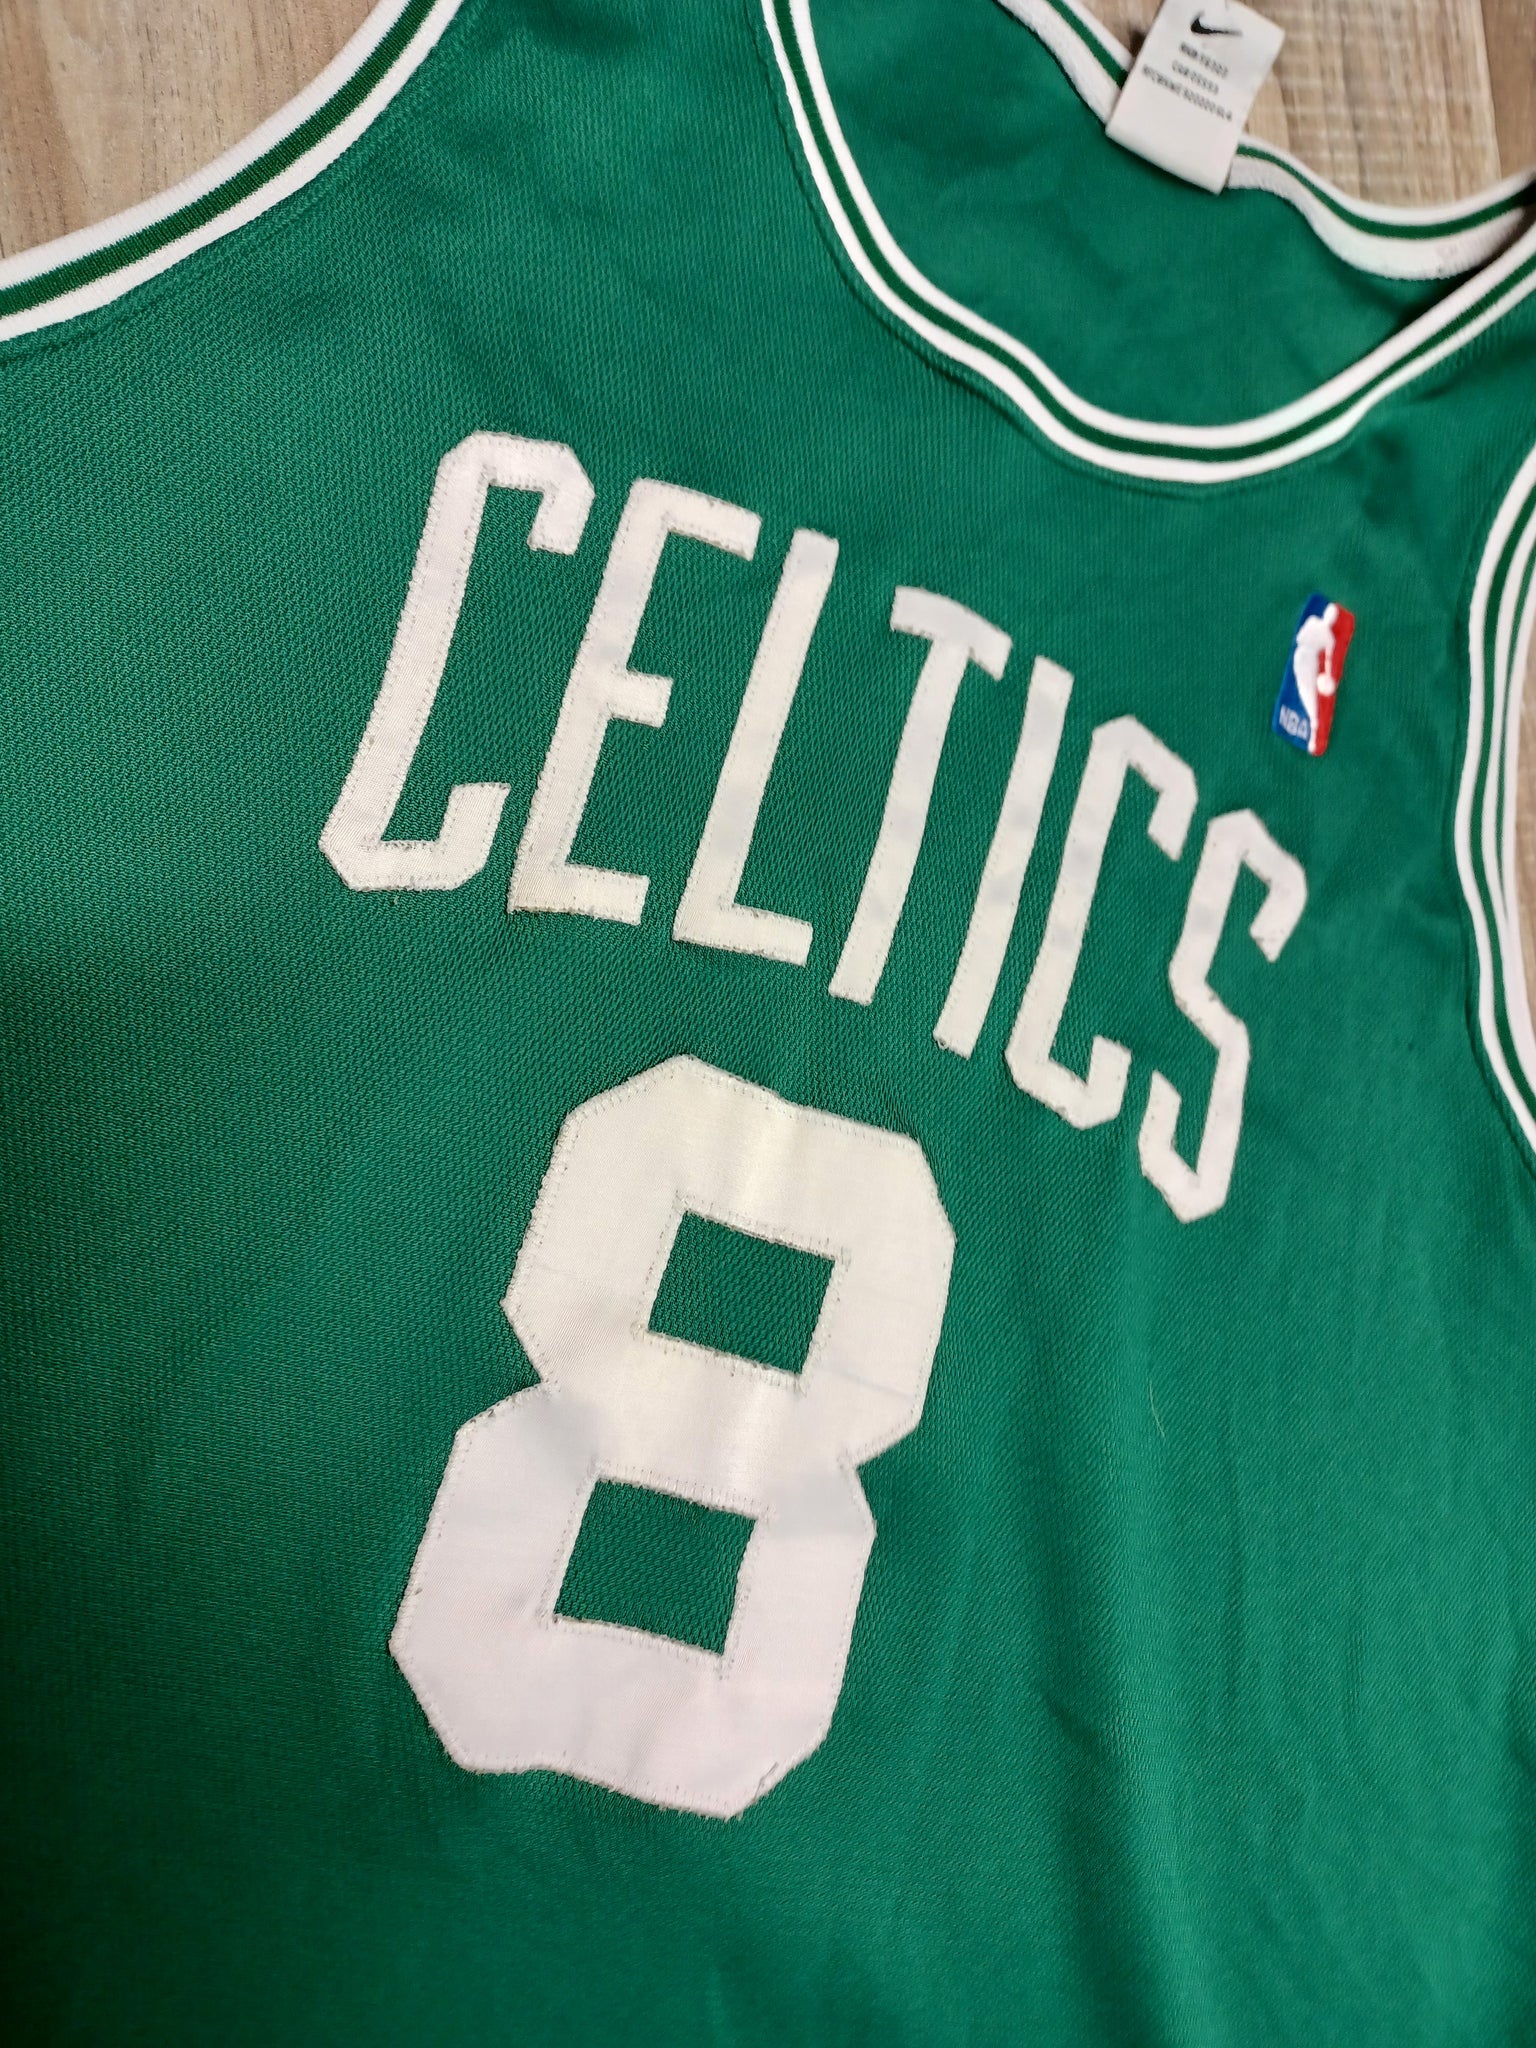 Vintage #8 ANTOINE WALKER Boston Celtics NBA Champion Jersey 14-16